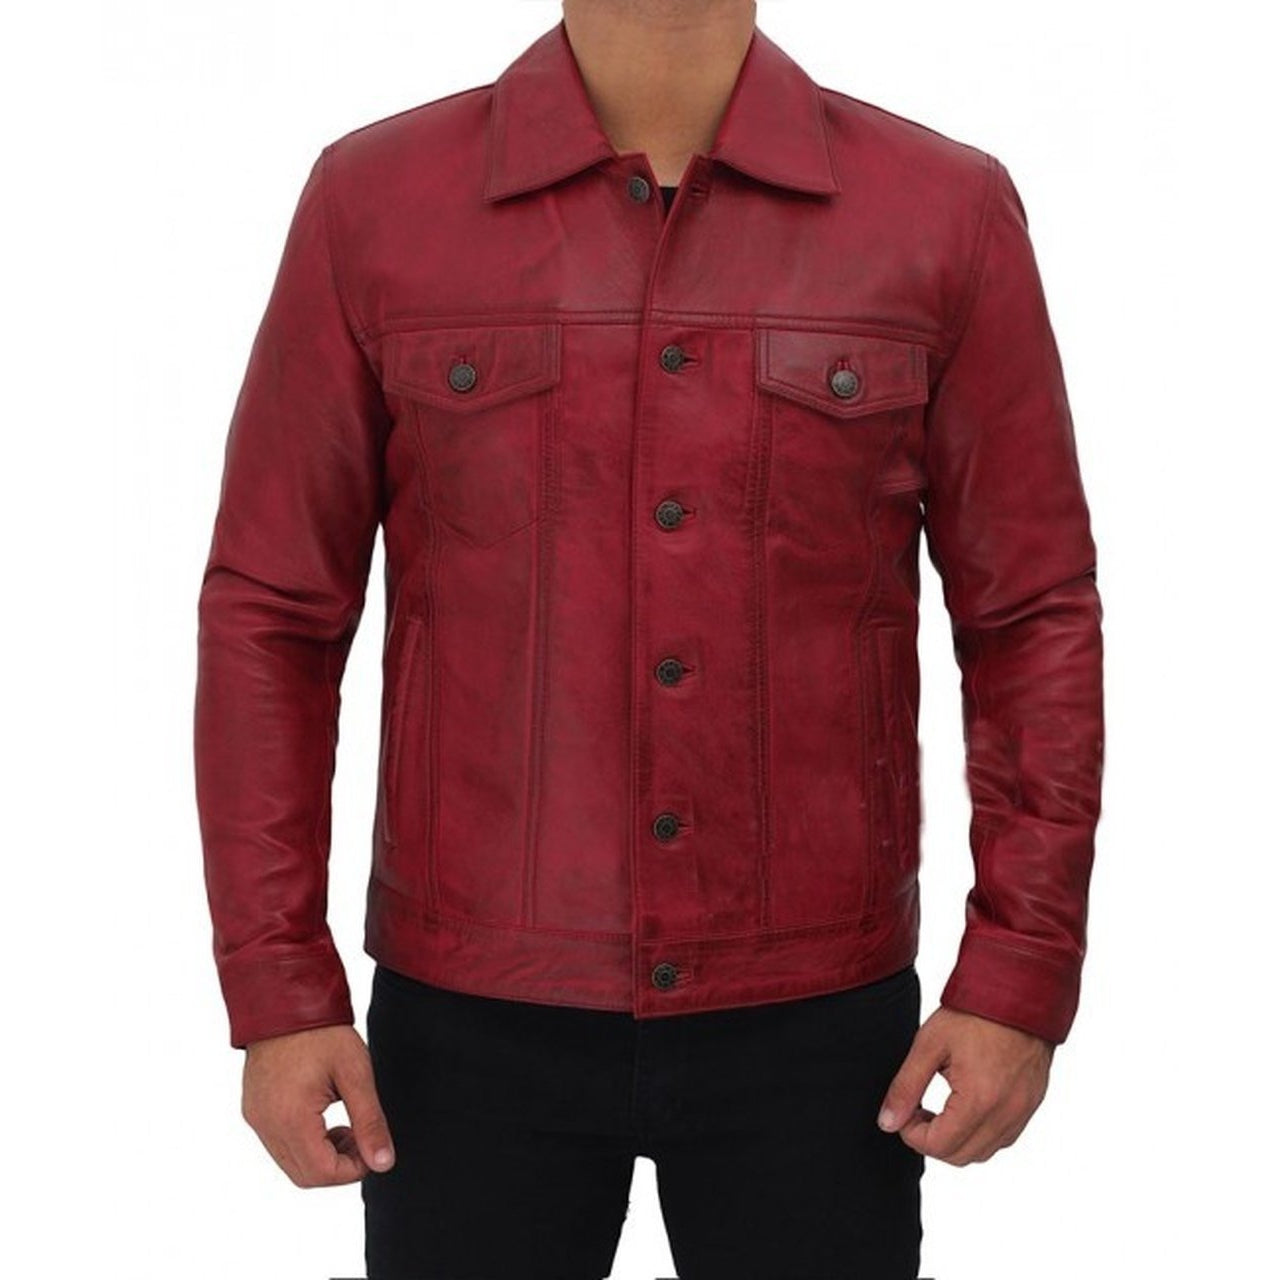 Maroon Trucker Leather Jacket Mens - Leather Jacket